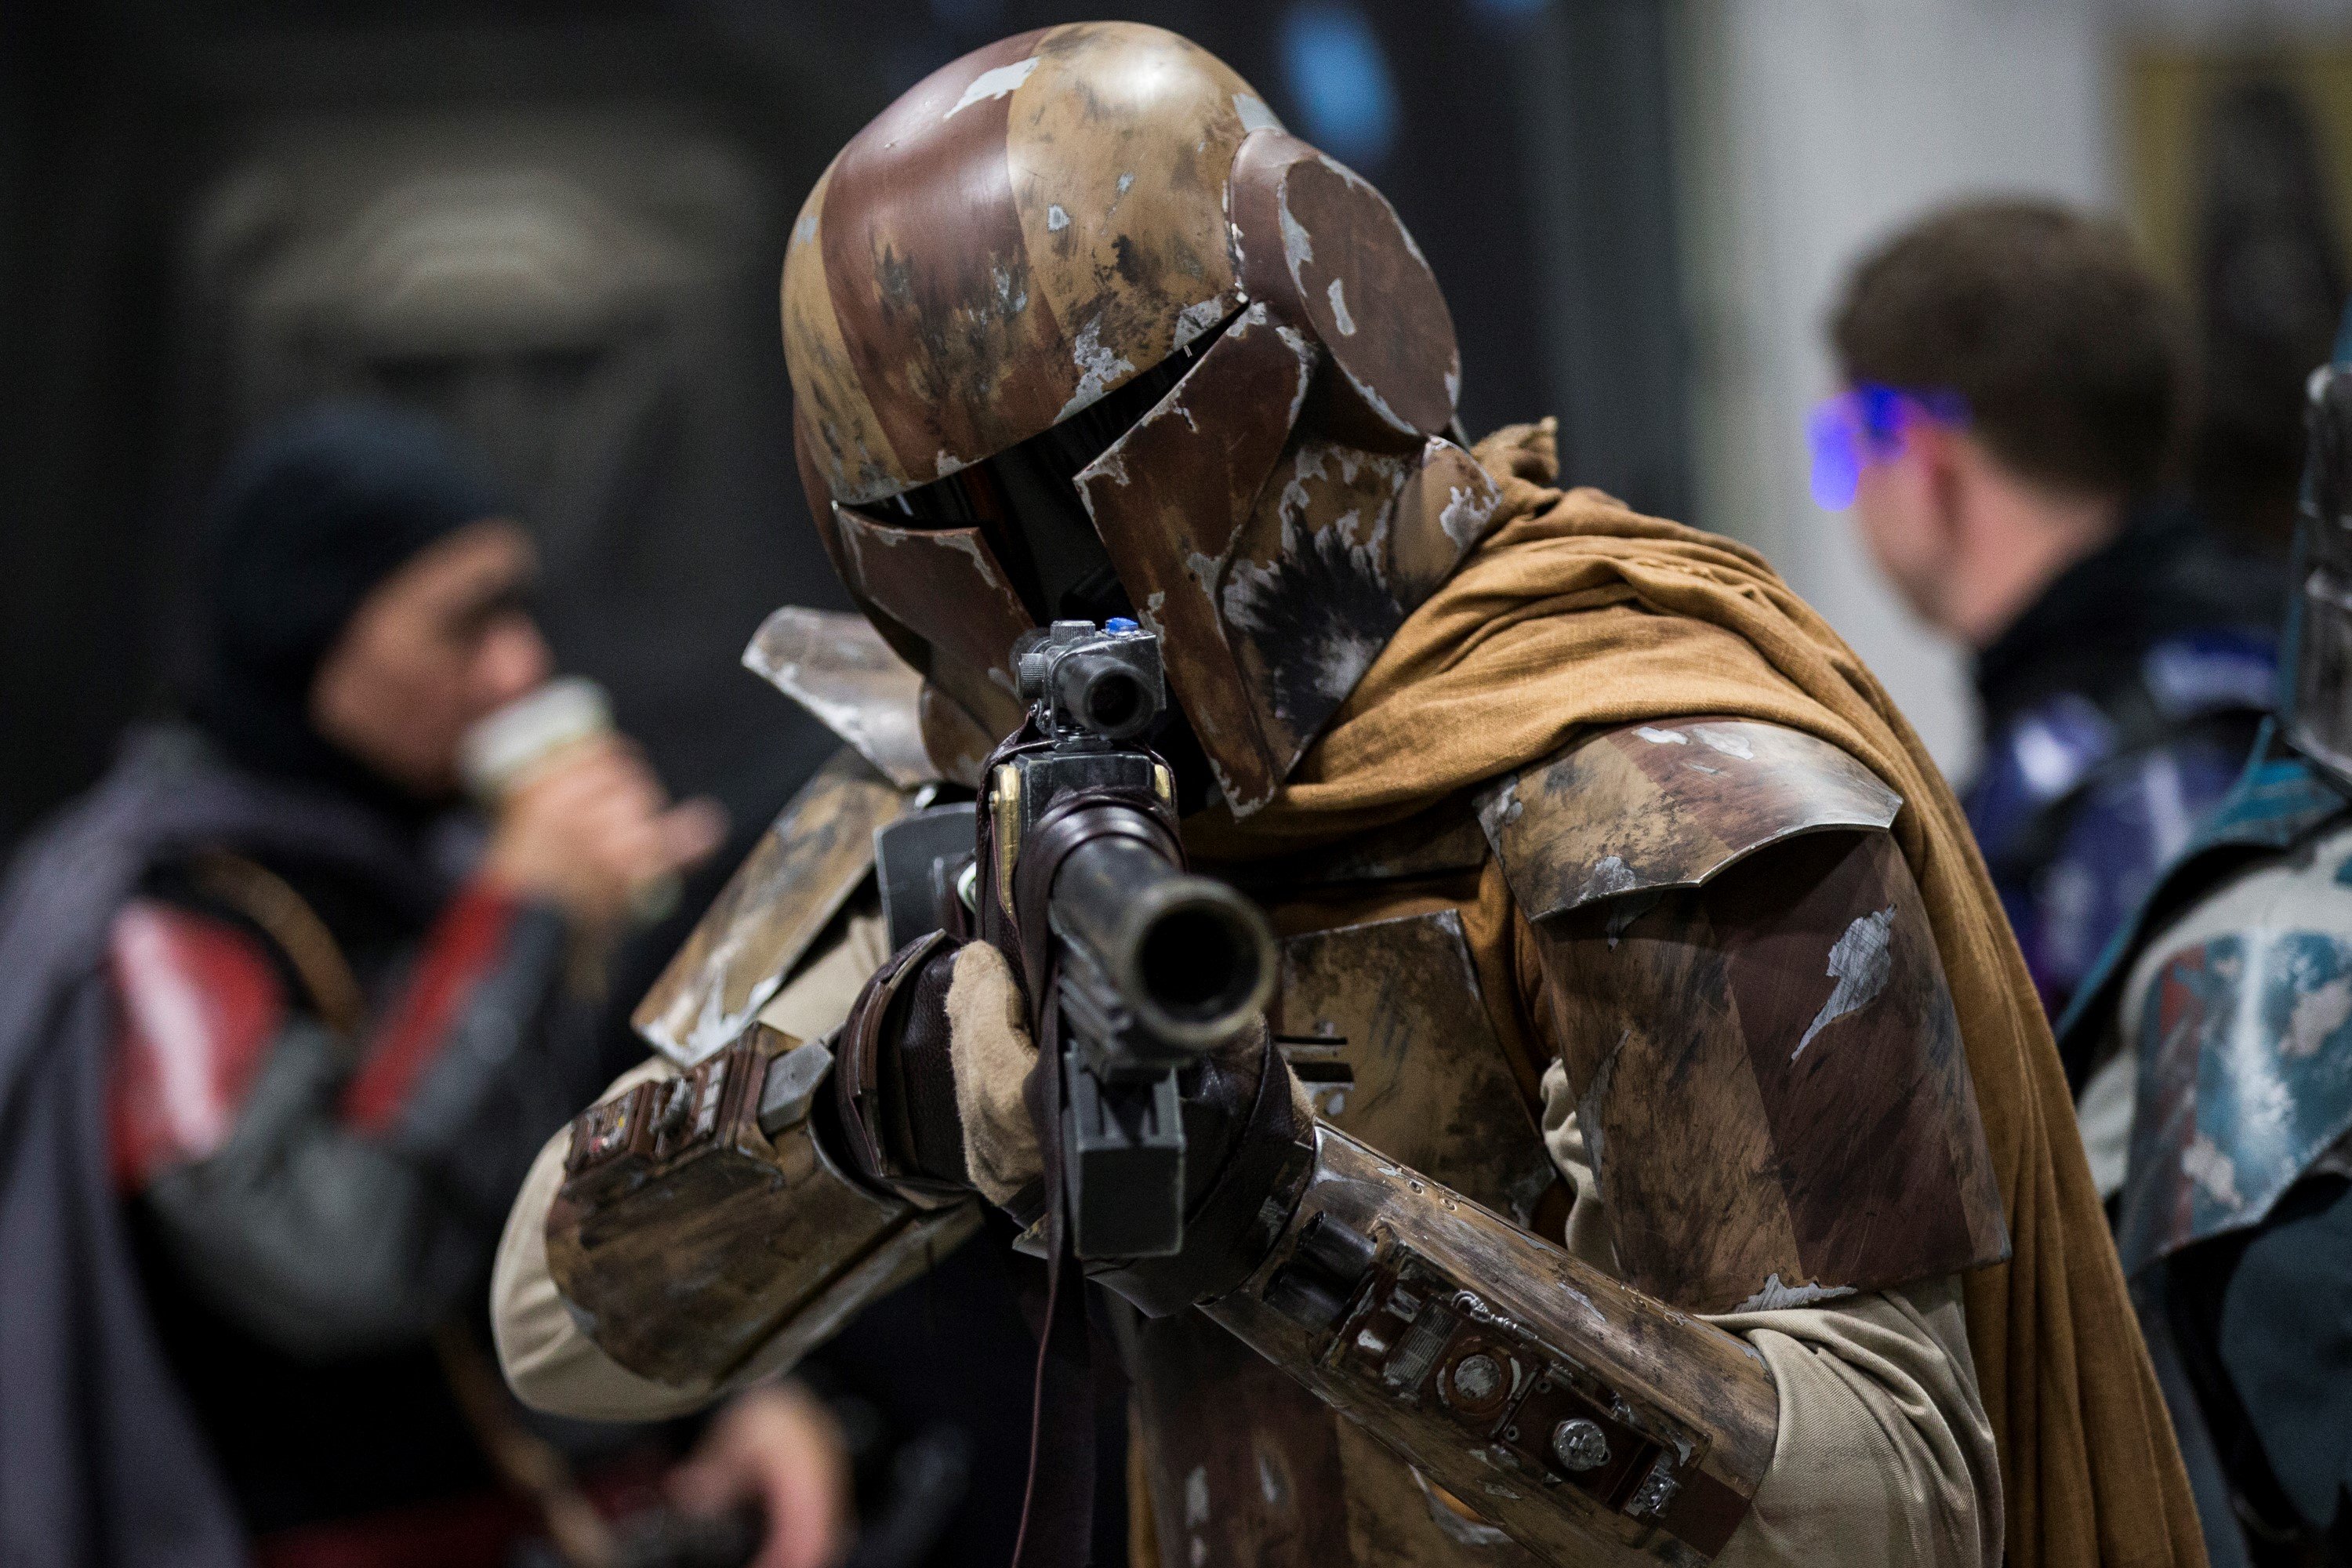 A Star Wars/Mandalorian cosplayer holding a blaster